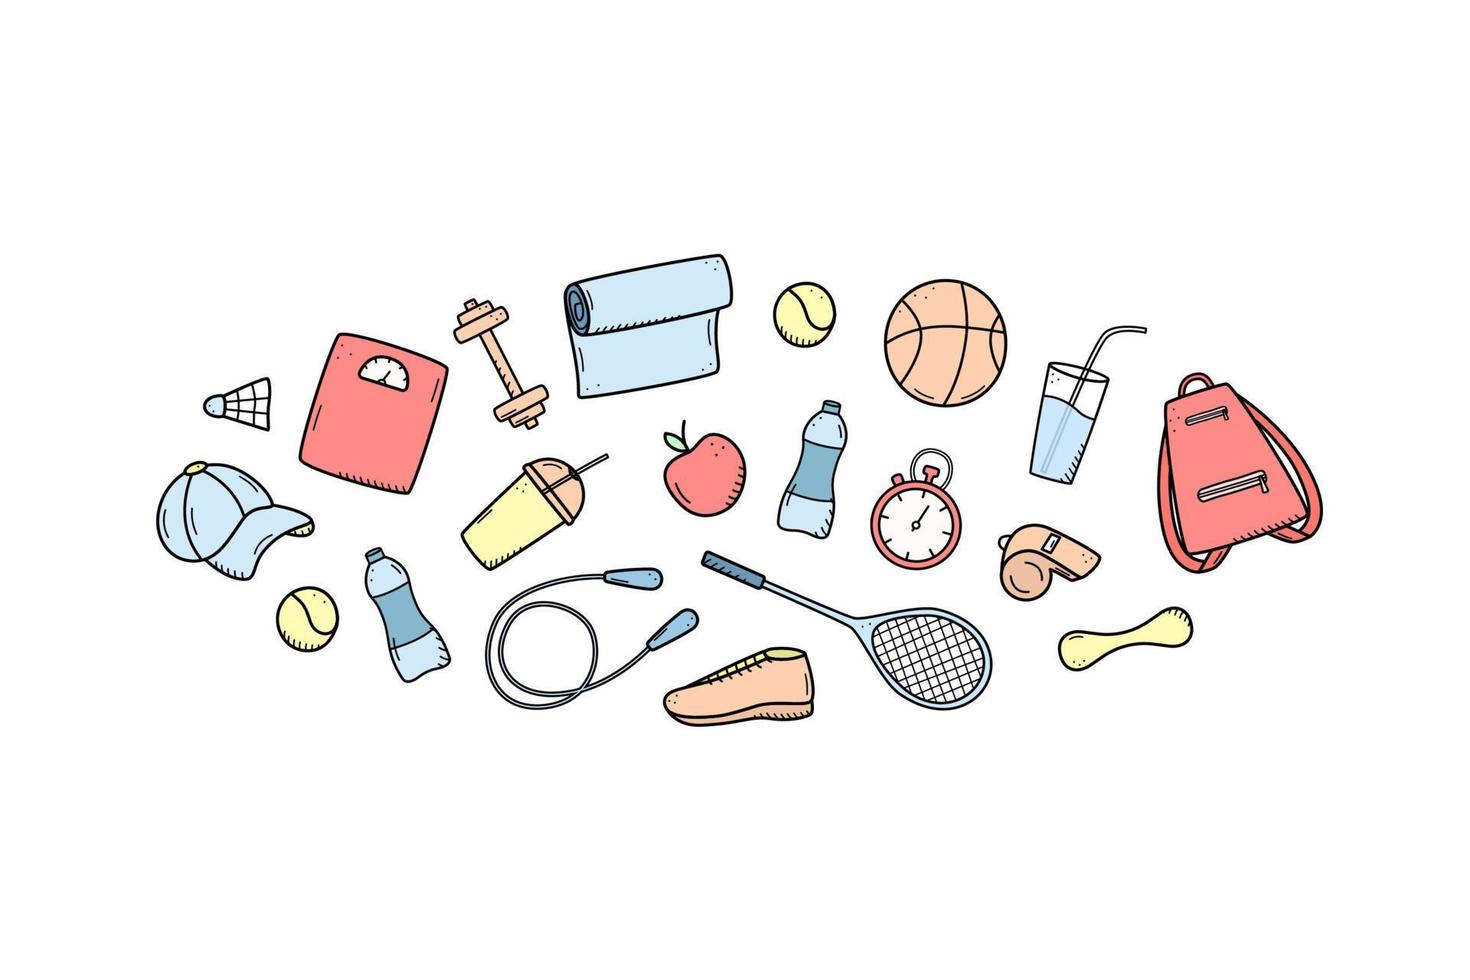 sport doodle ikonuppsättning koncept. designelement av en sportinvert, en hälsosam livsstil vektorillustration vektor